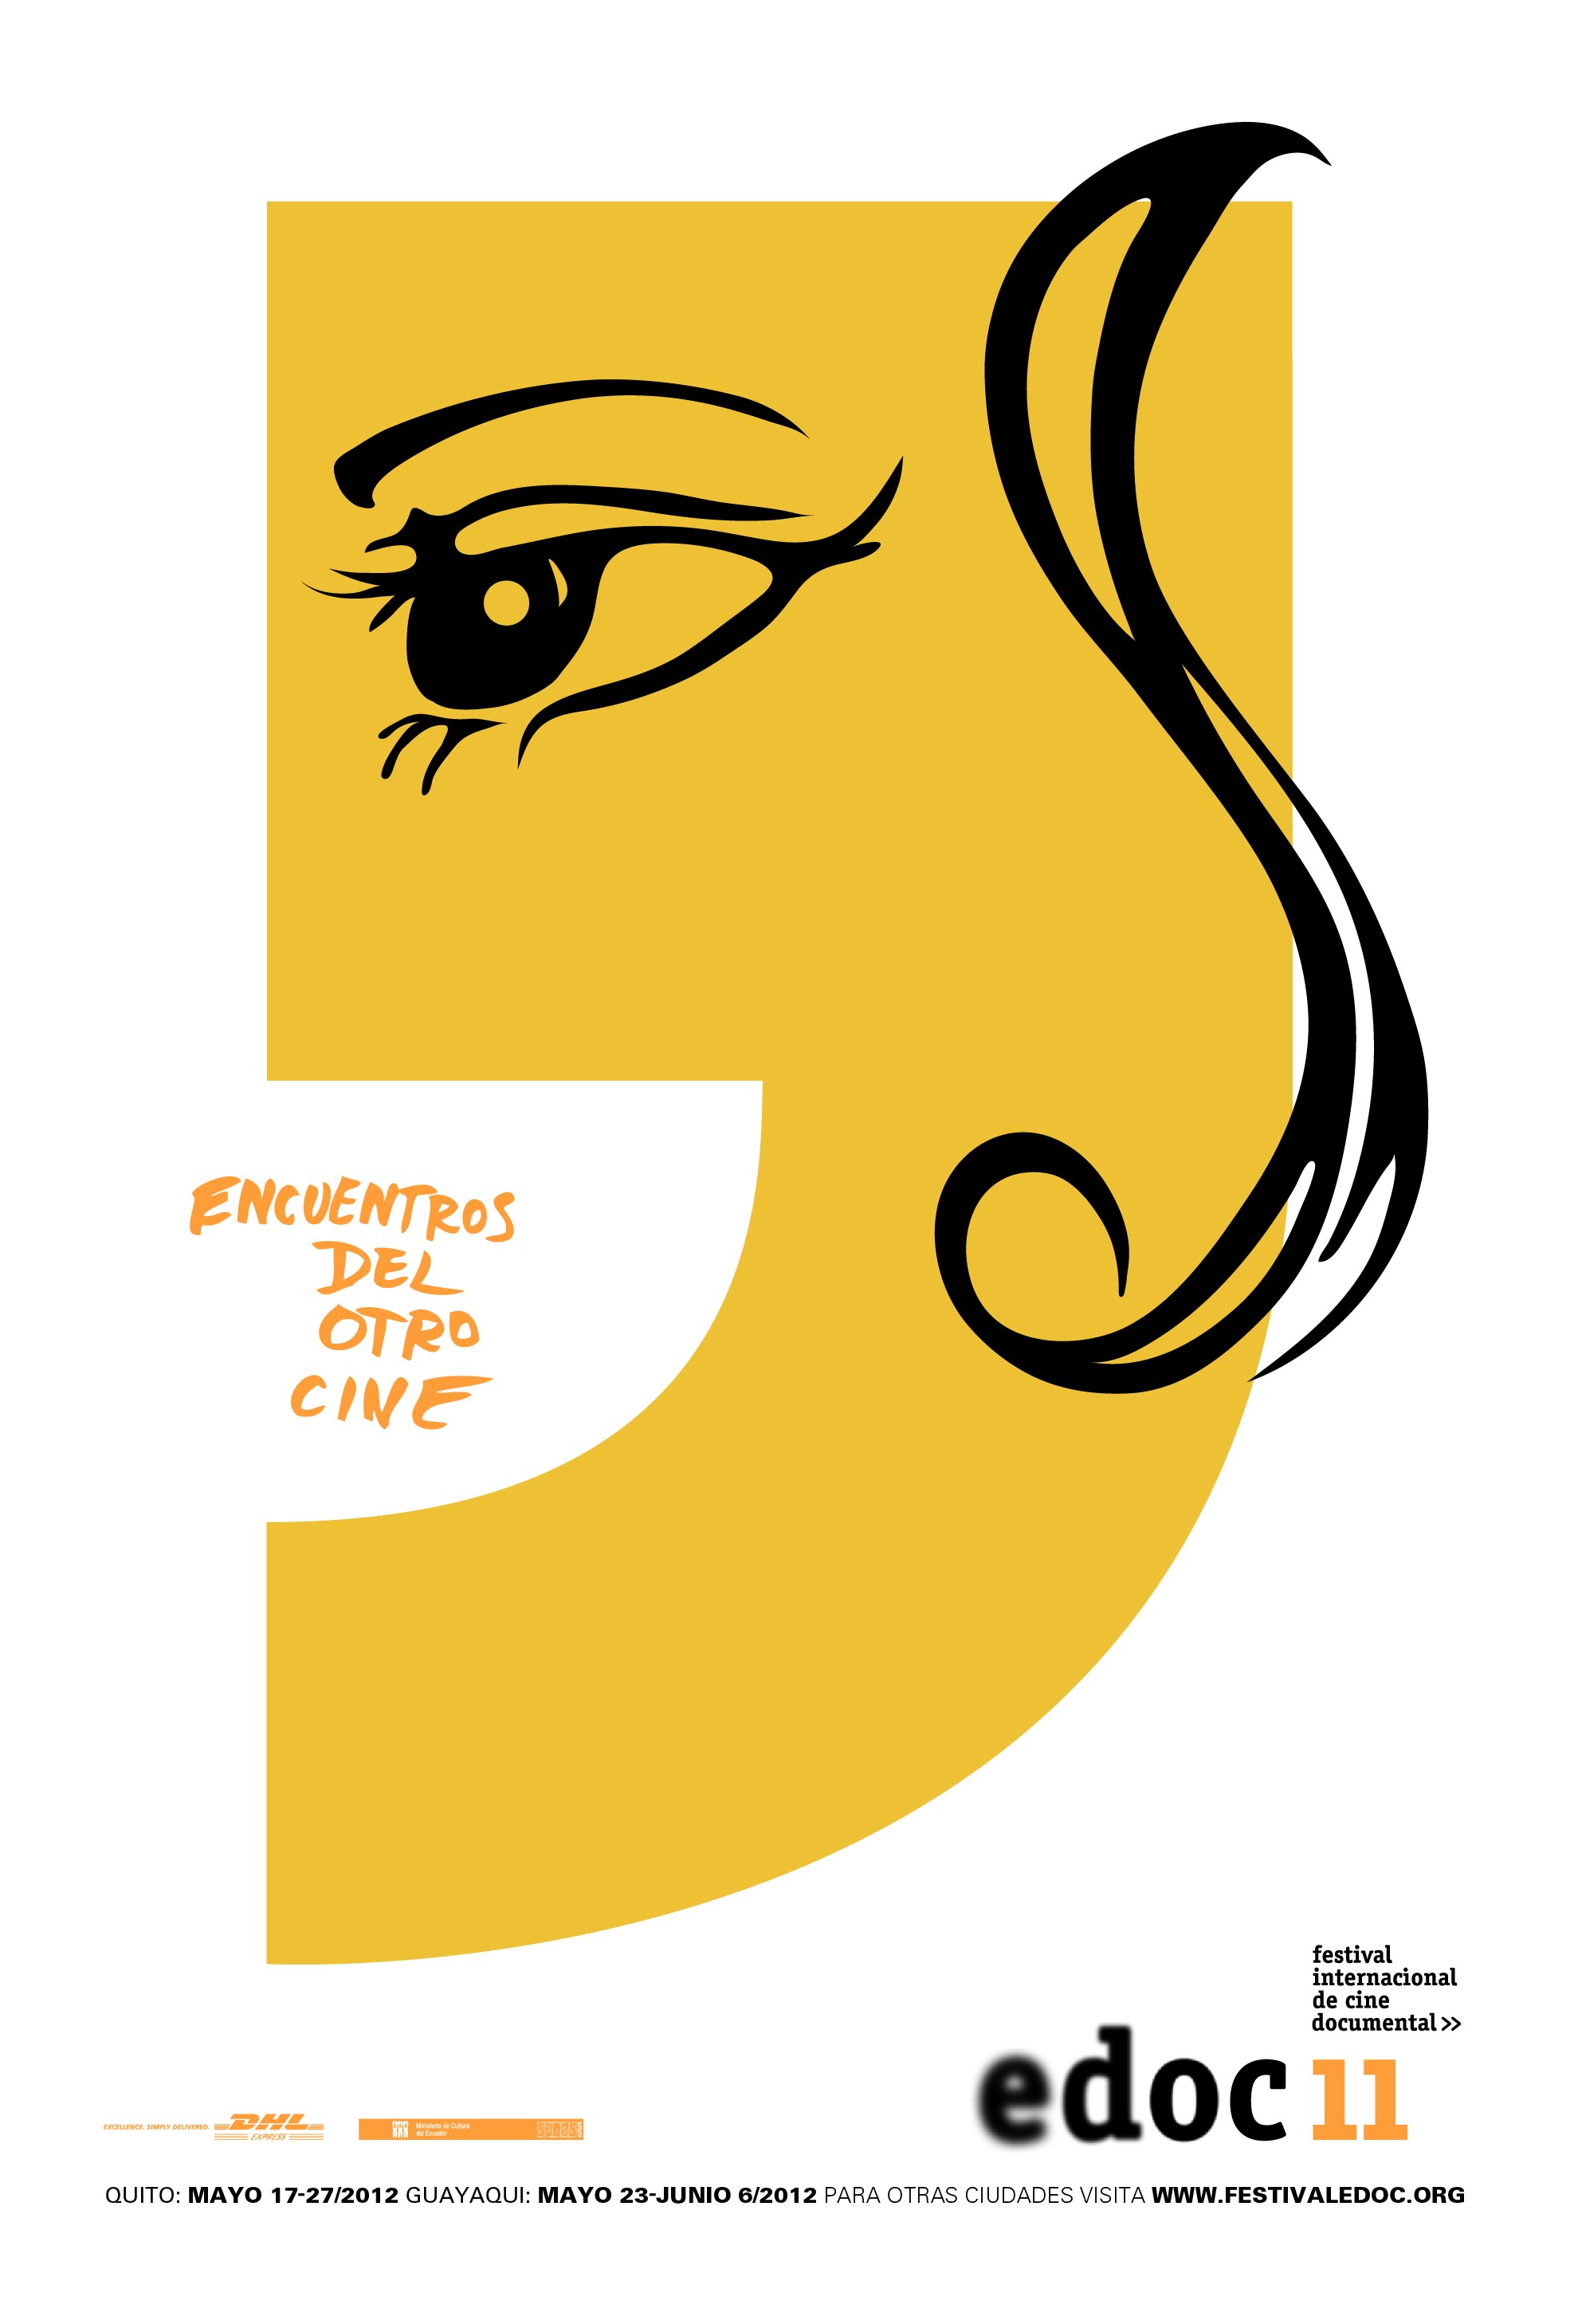 Mega Sized TV Poster Image for Encuentros del Otro Cine Festival (#2 of 2)